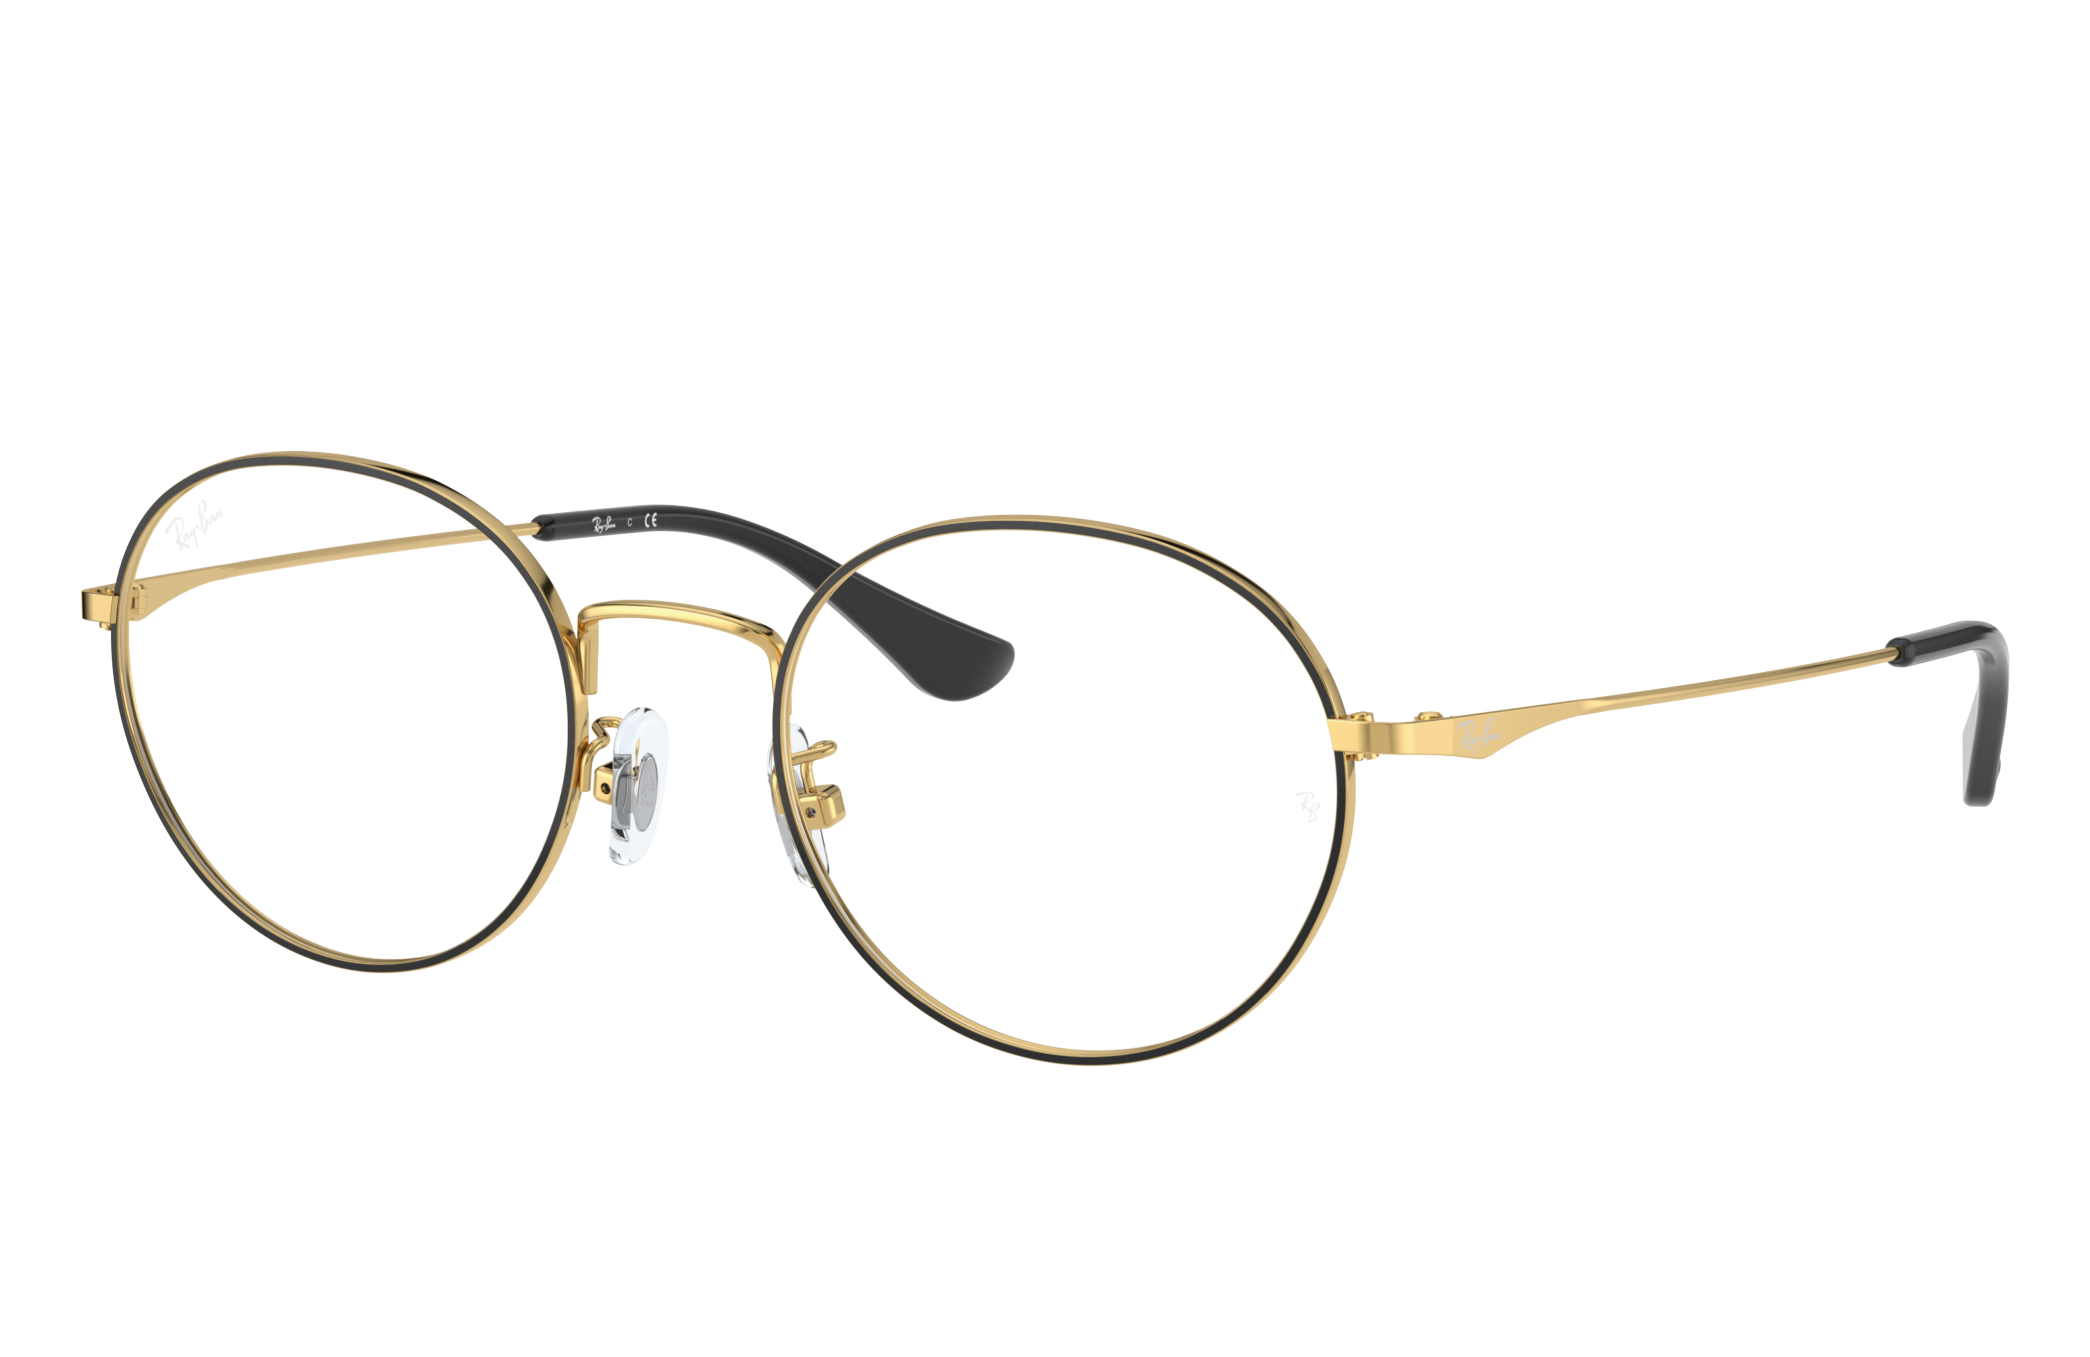 Rb6369 Optics Eyeglasses with Black On Gold Frame - RB6369D | Ray-Ban®